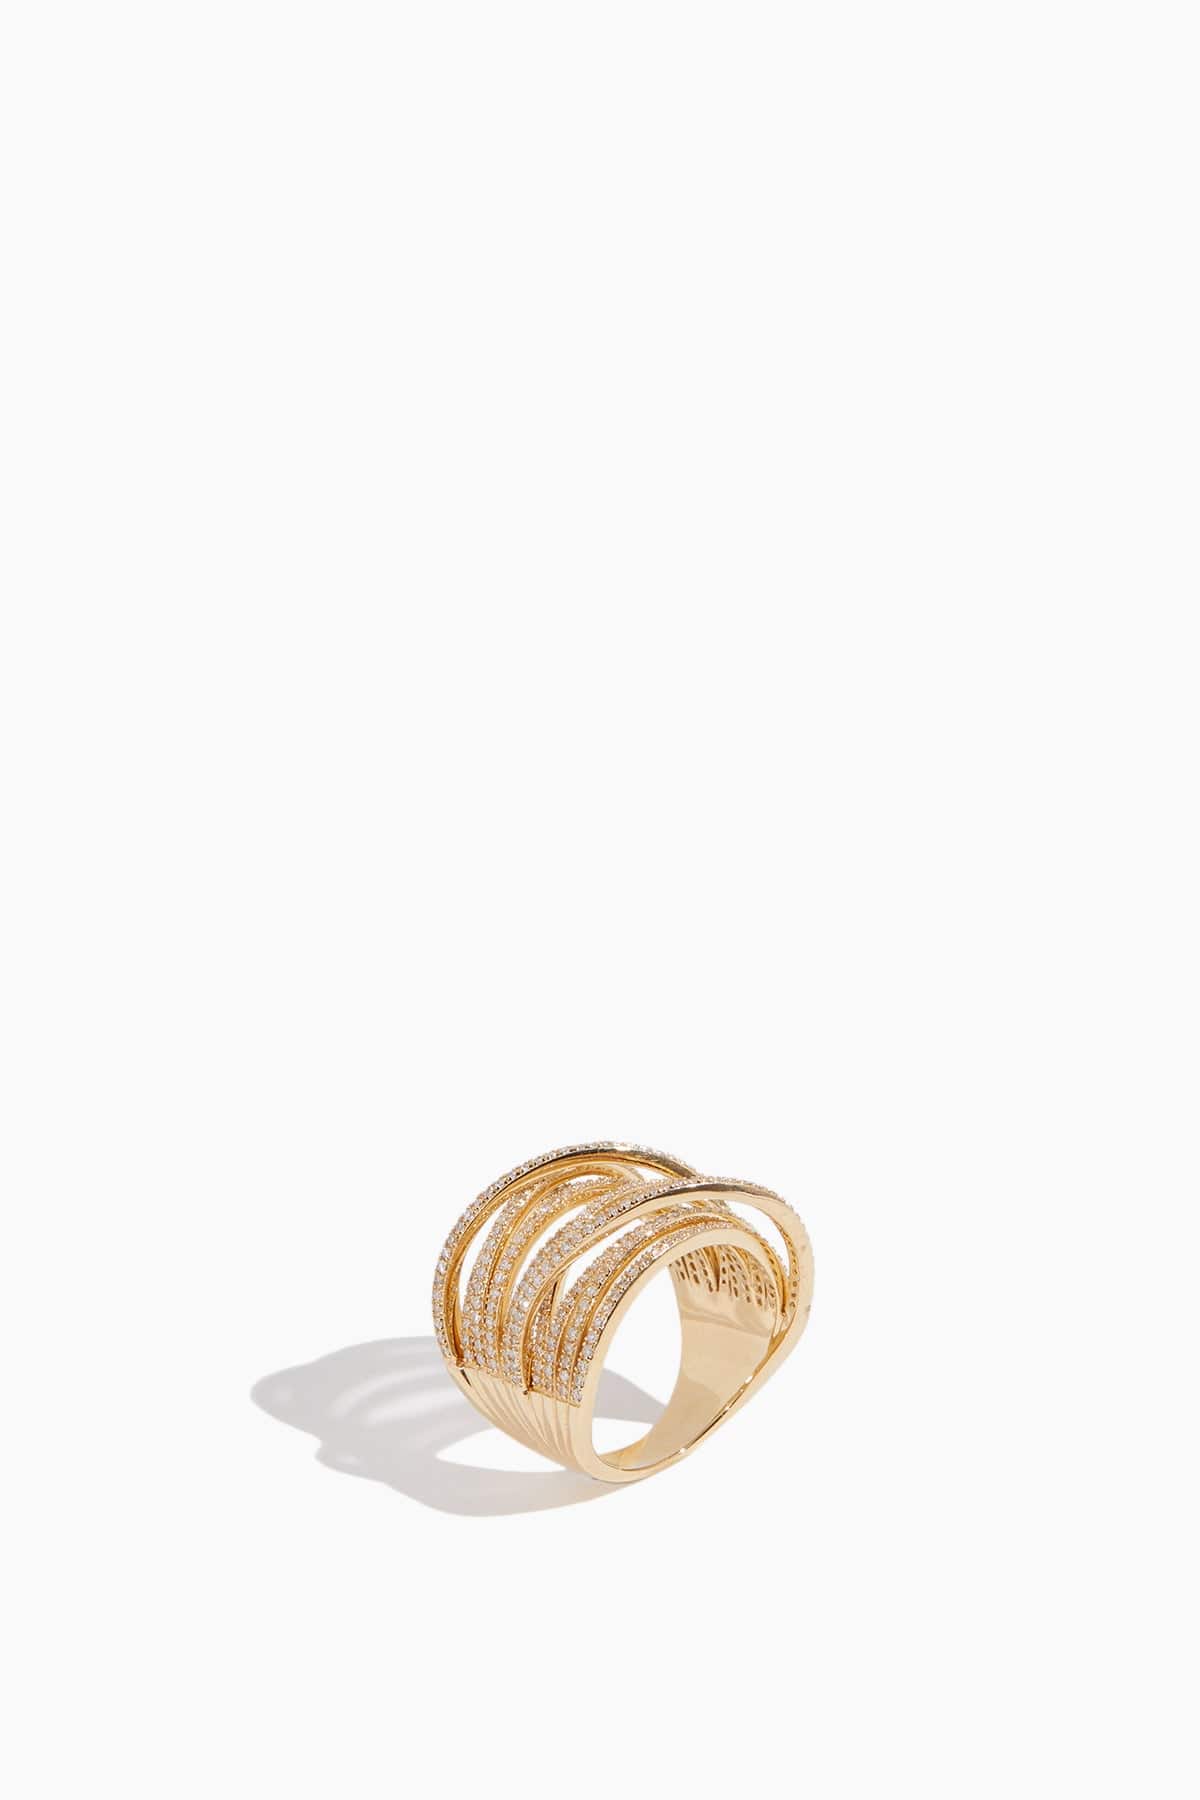 Vintage La Rose Rings Pave Wrap Ring in 14k Yellow Gold Vintage La Rose Pave Wrap Ring in 14k Yellow Gold